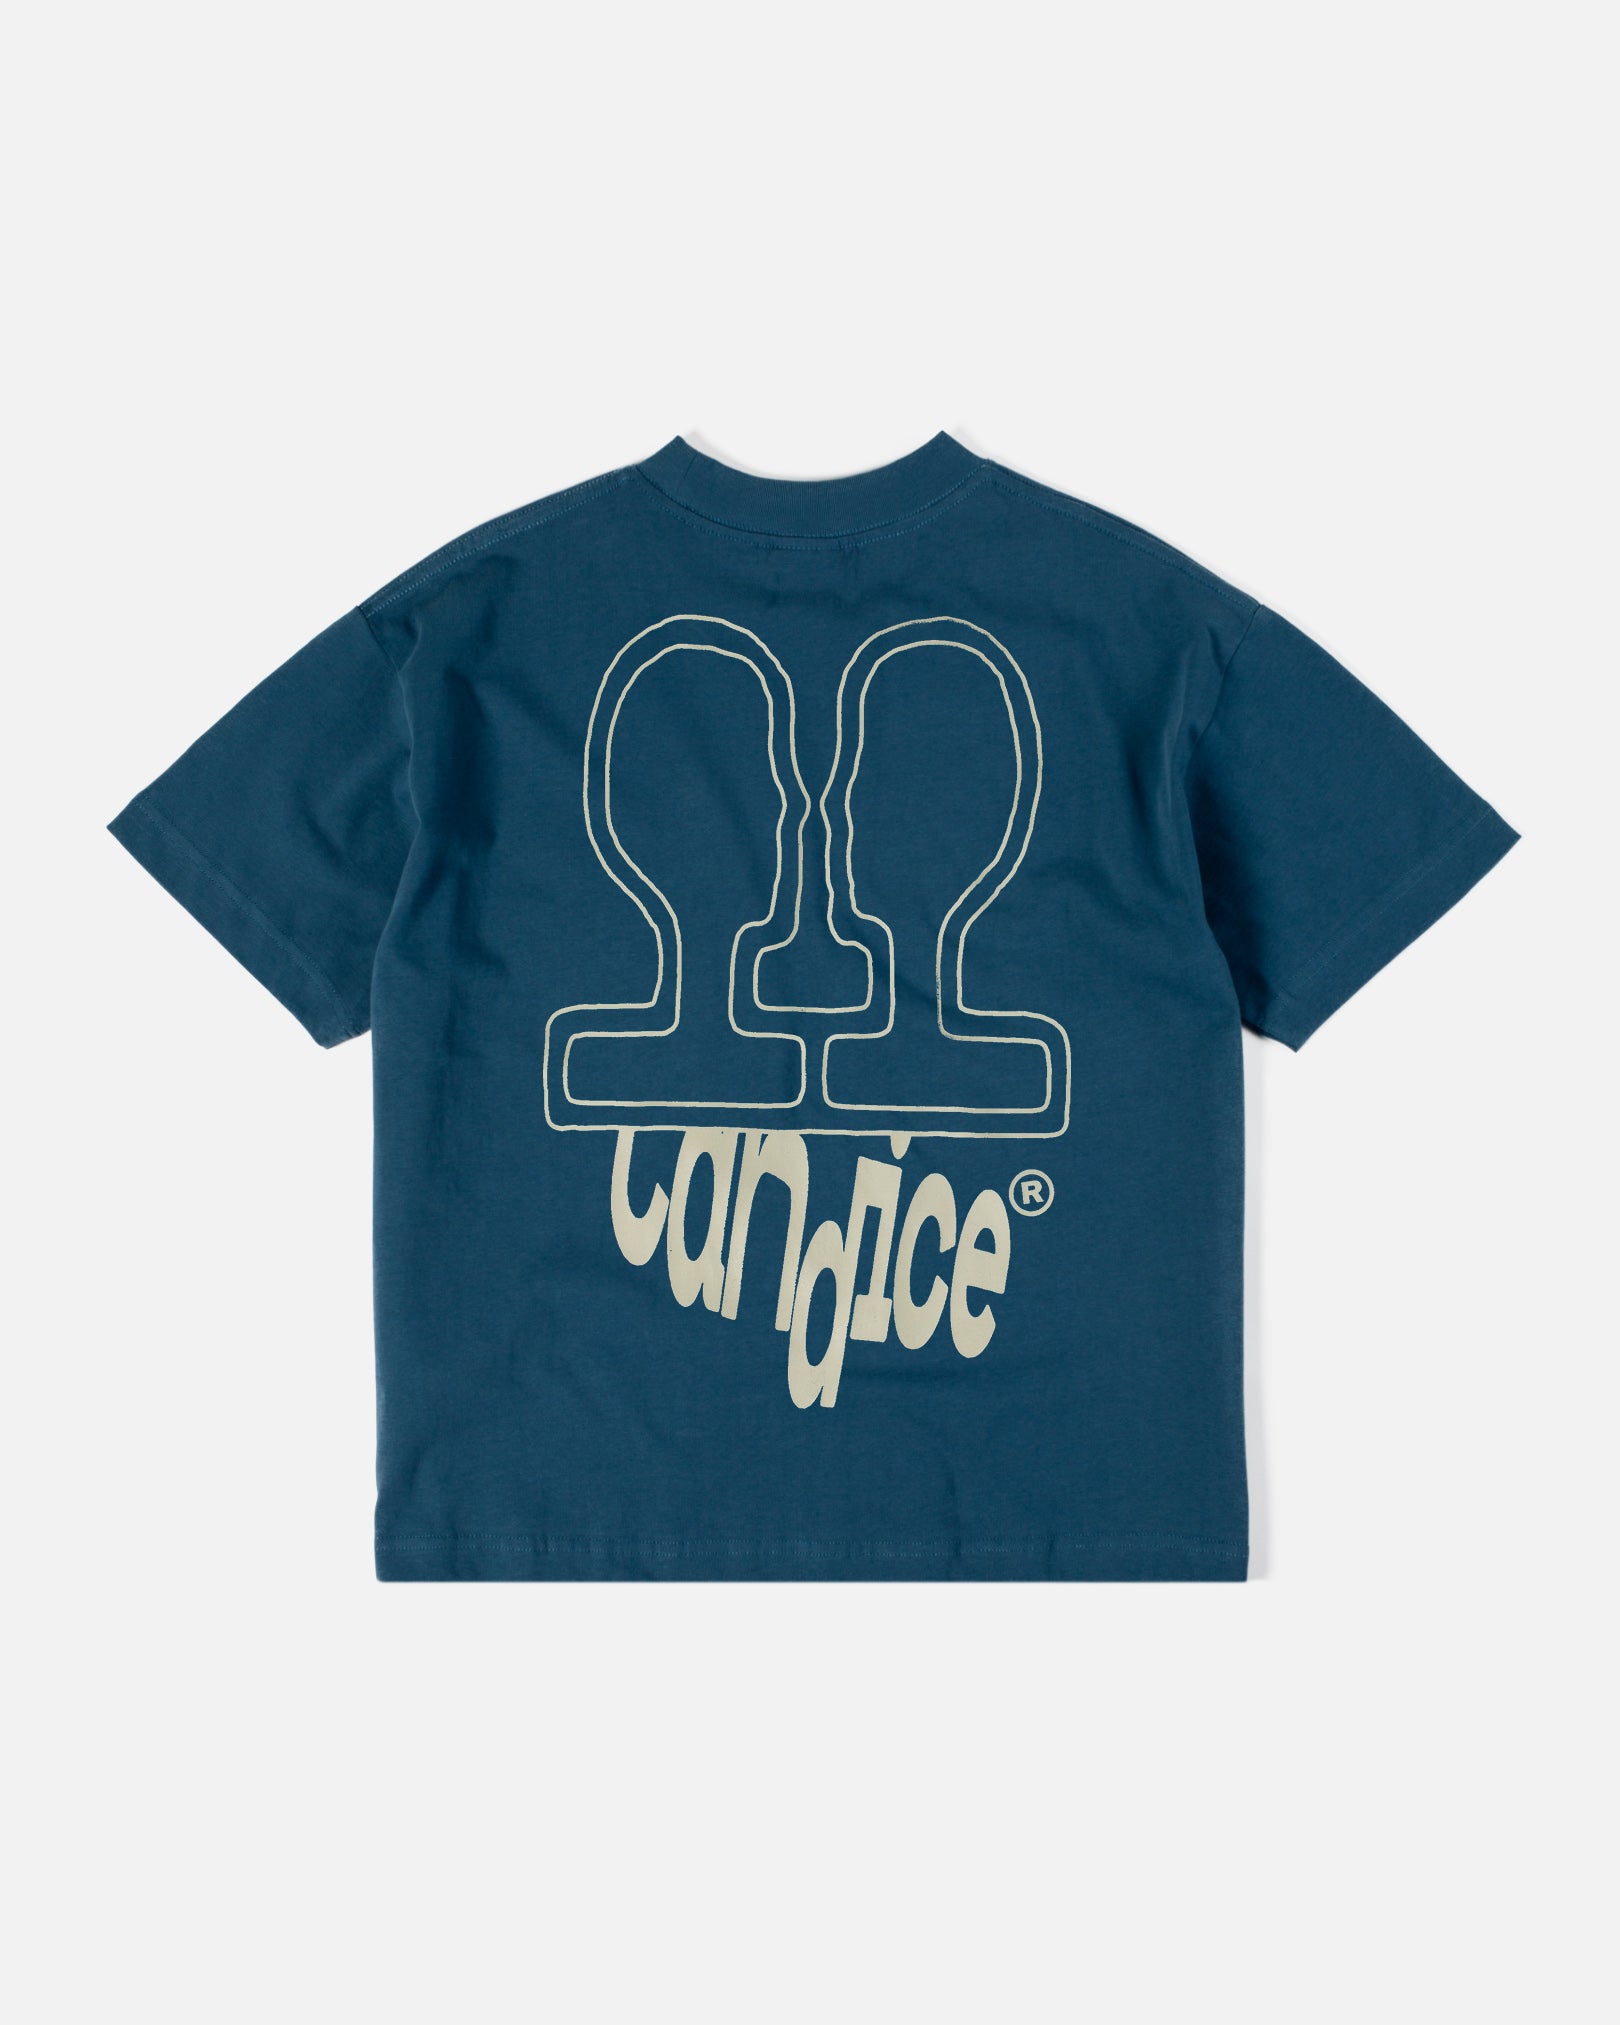 candice-boxy-tshirt-connect-blue-back